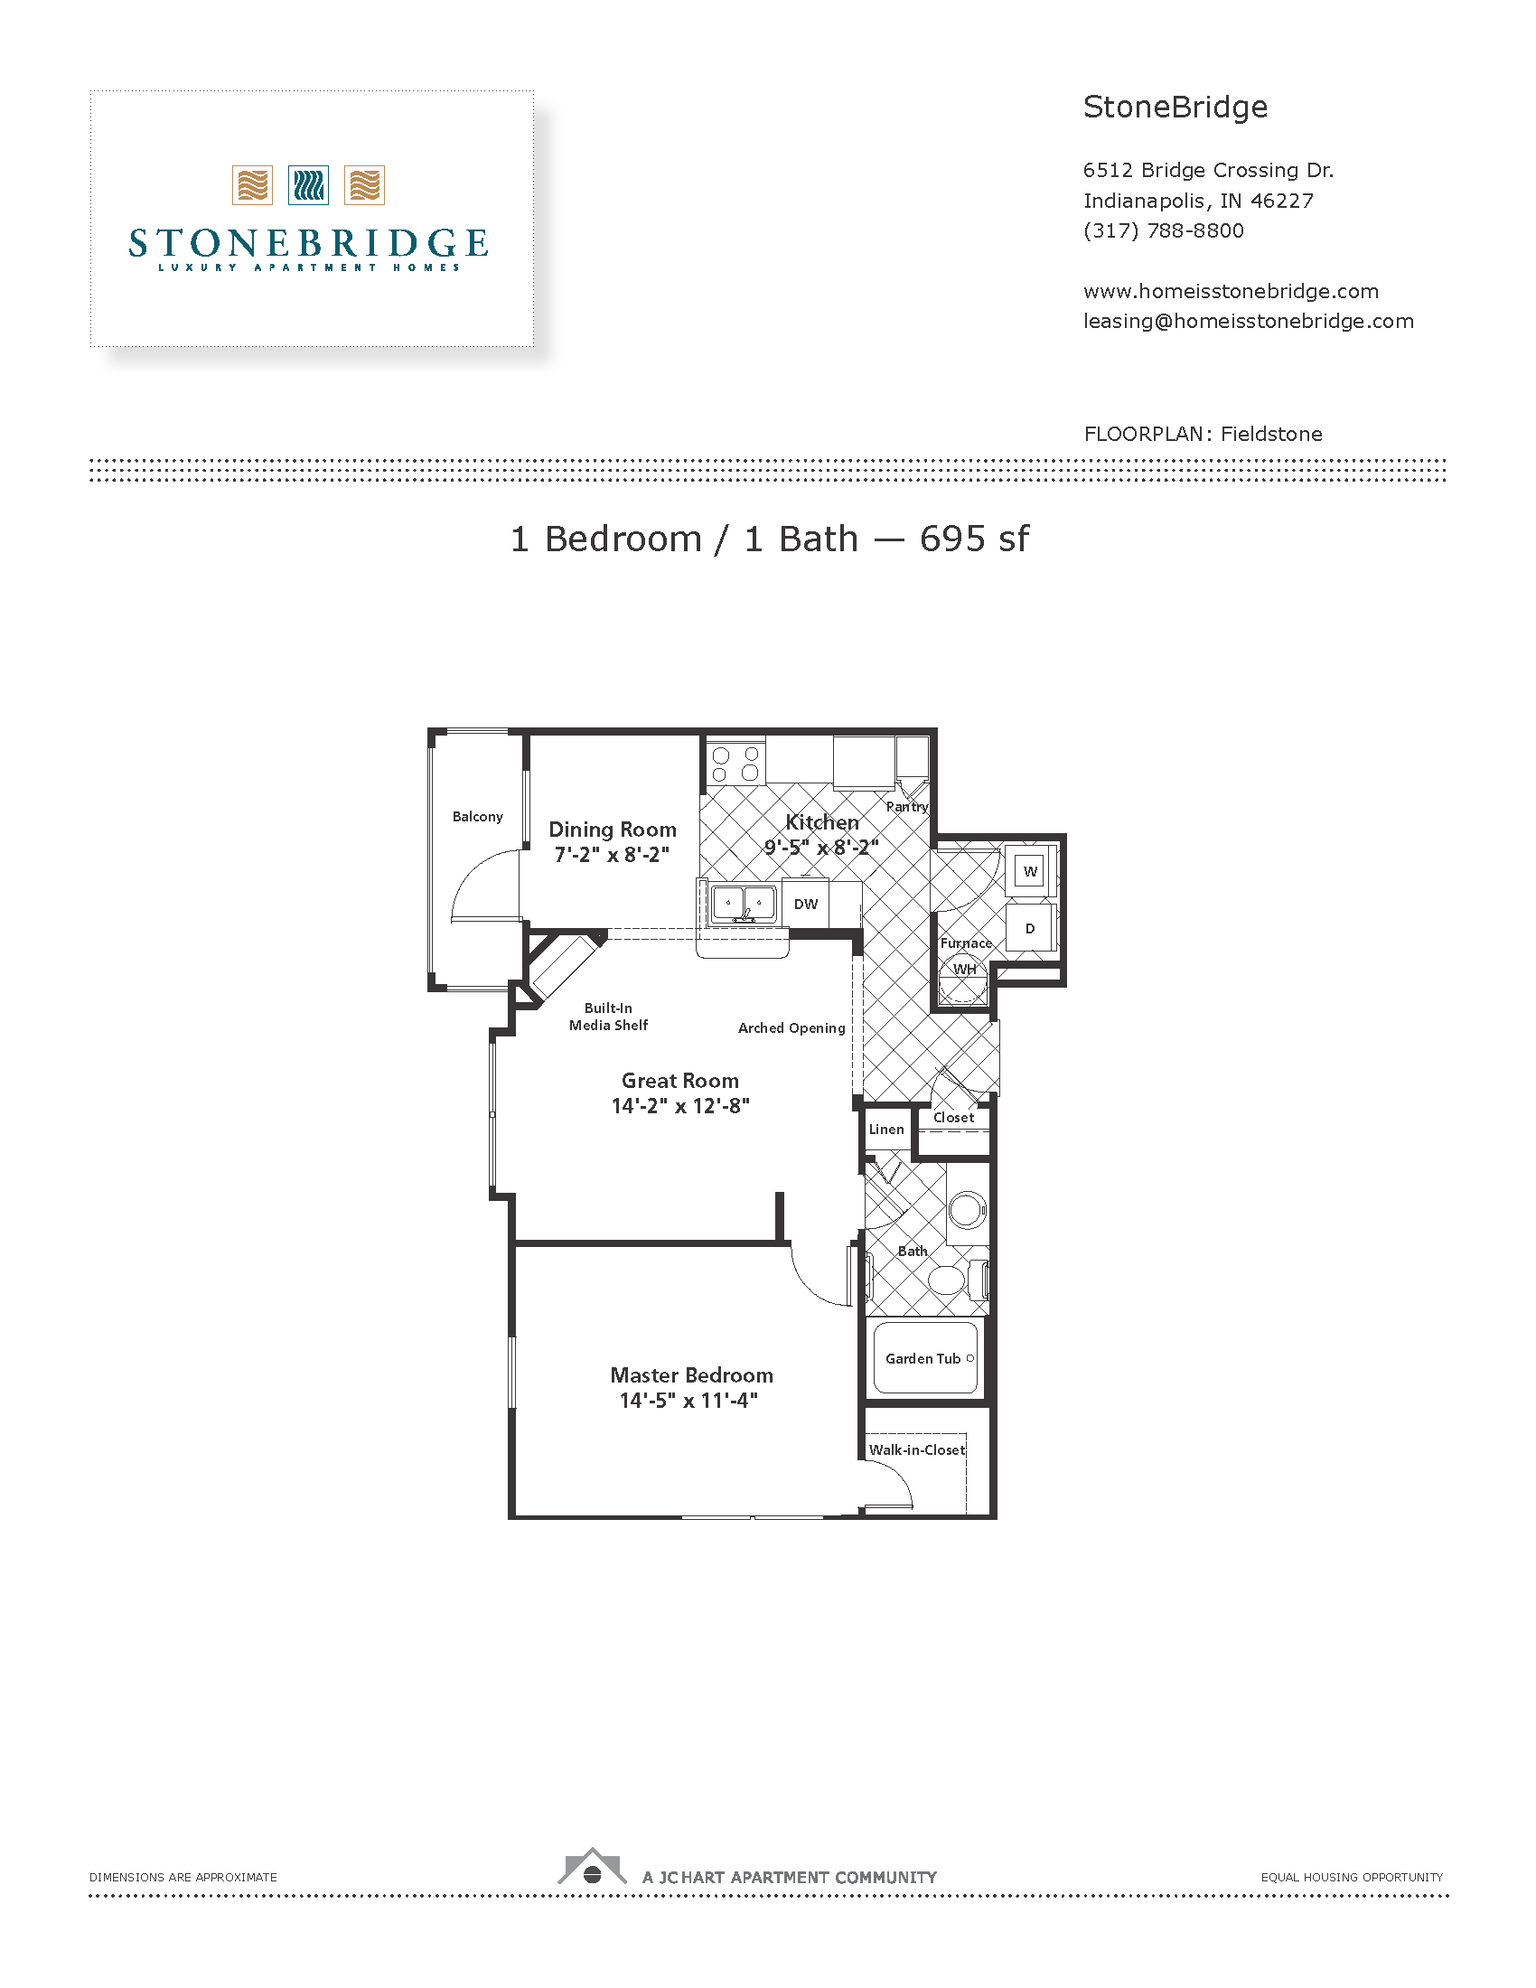 Fieldstone floor plan - StoneBridge Apartment Homes _ Indianapolis apartments_preview.png